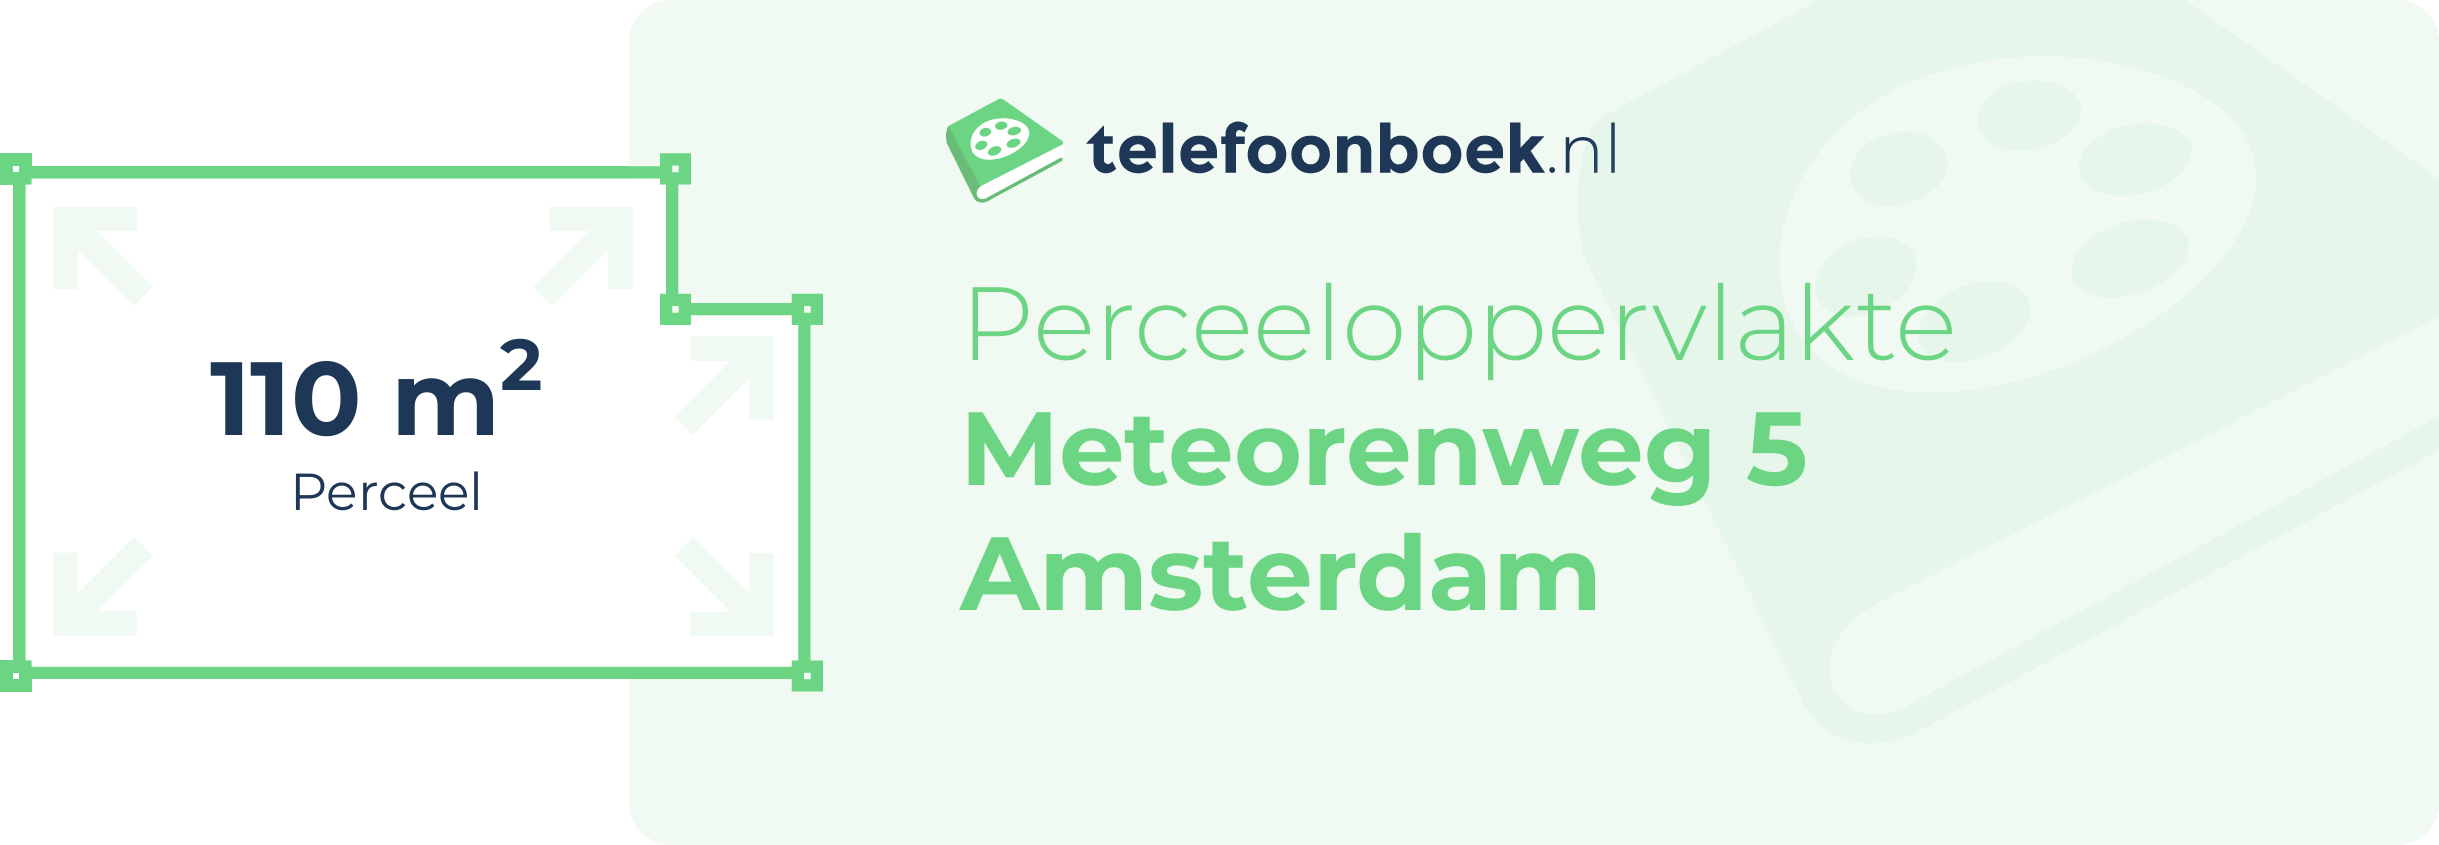 Perceeloppervlakte Meteorenweg 5 Amsterdam